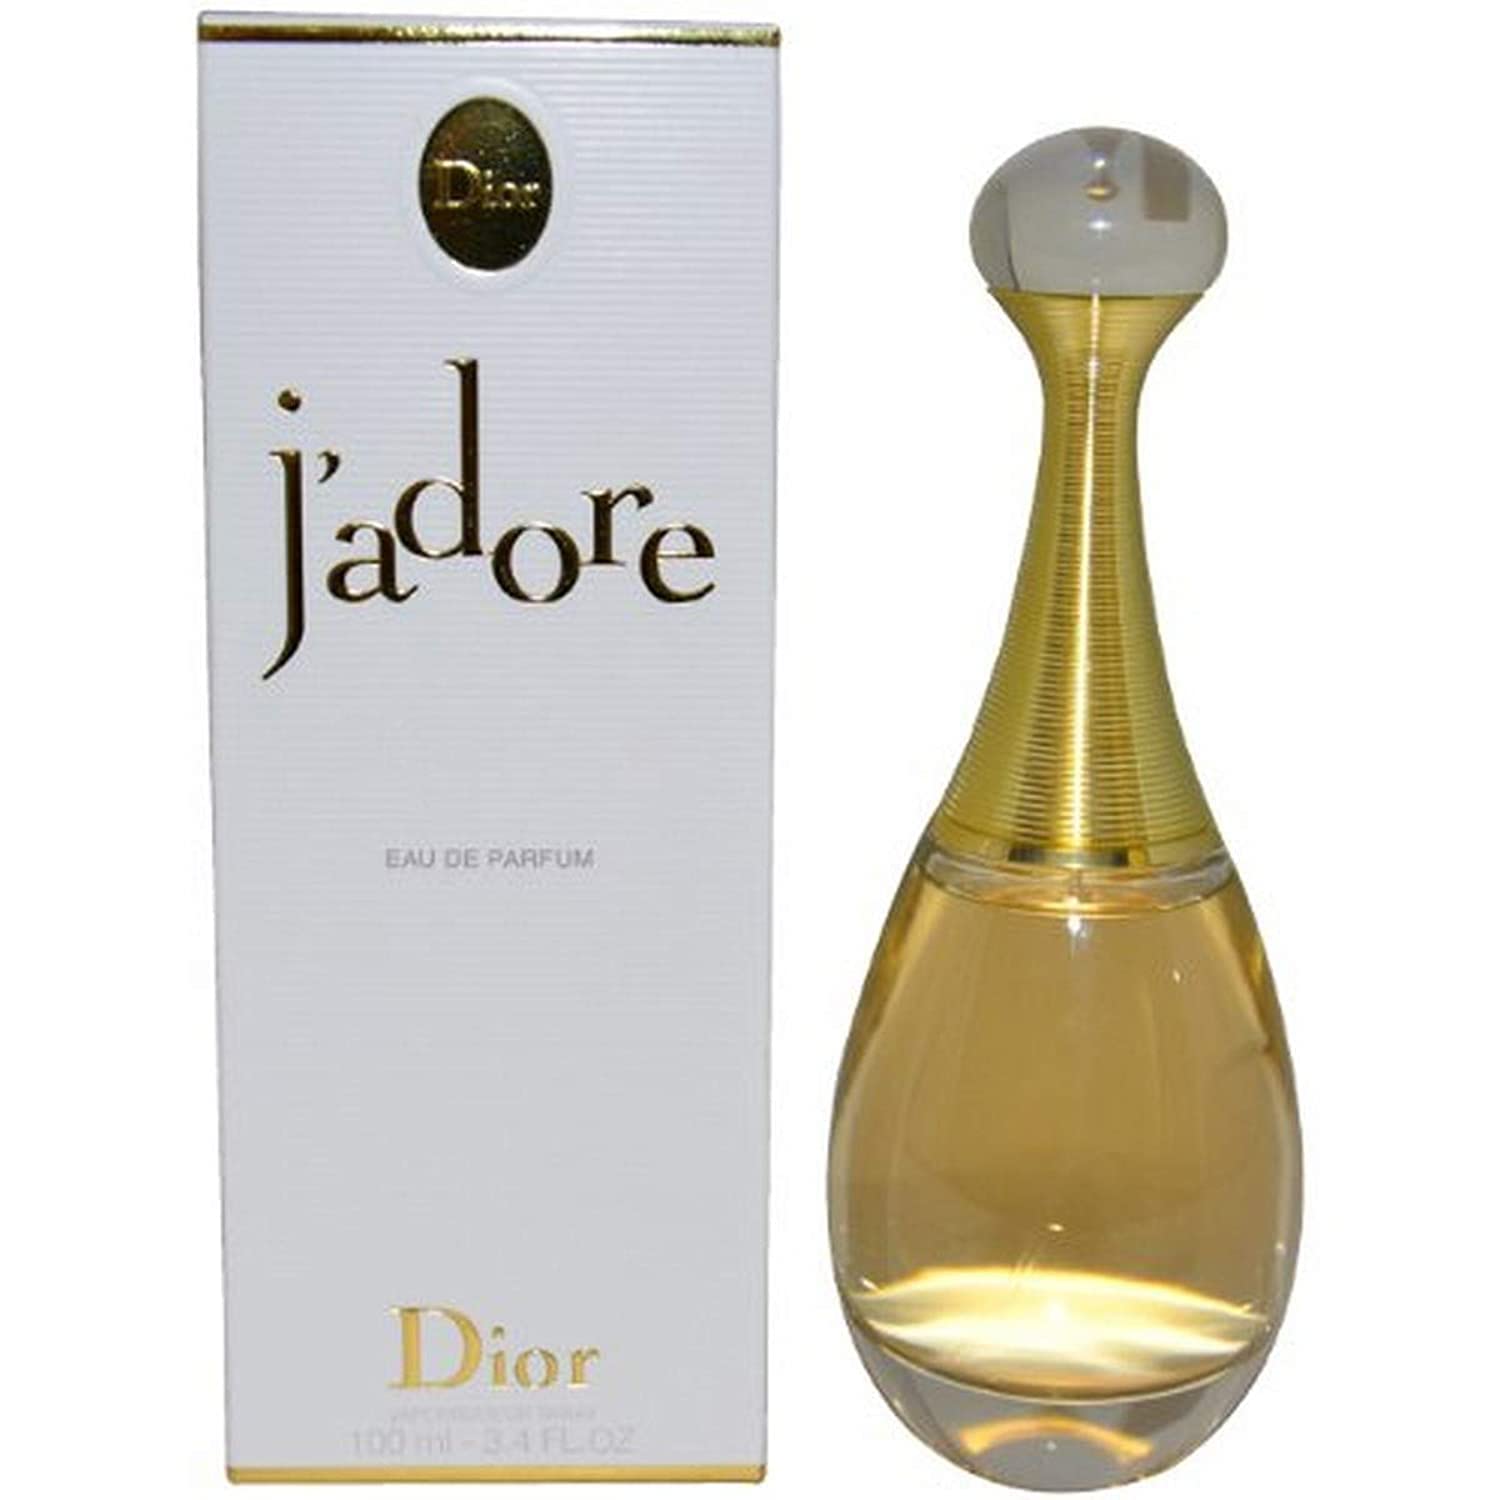 Jadore Eau de parfum  Womens Fragrance  Fragrance  DIOR